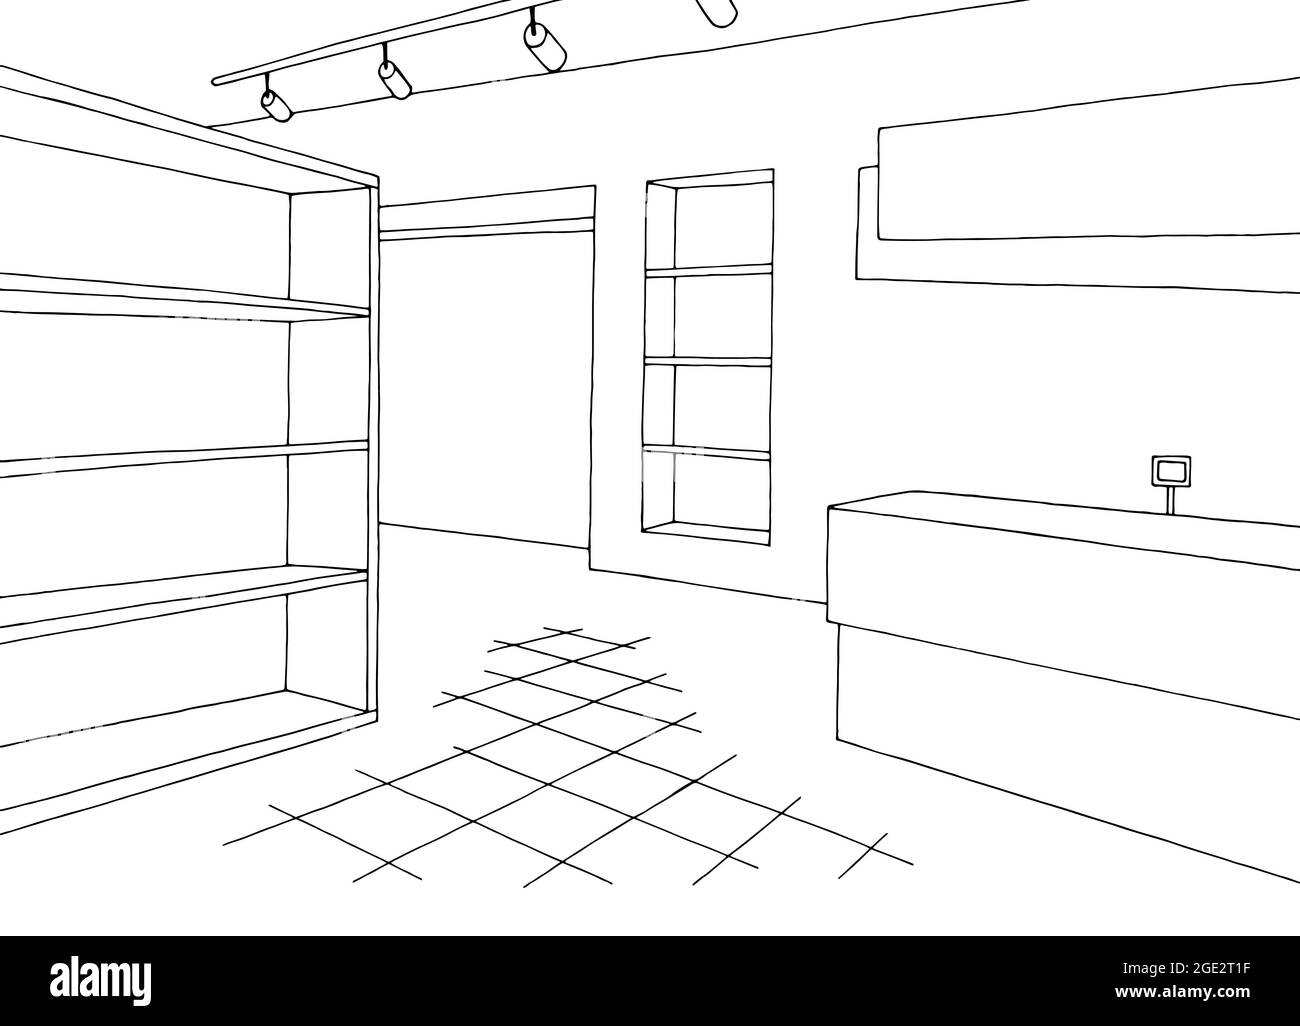 Empty store shop interior black white graphic sketch illustration vector Stock Vector